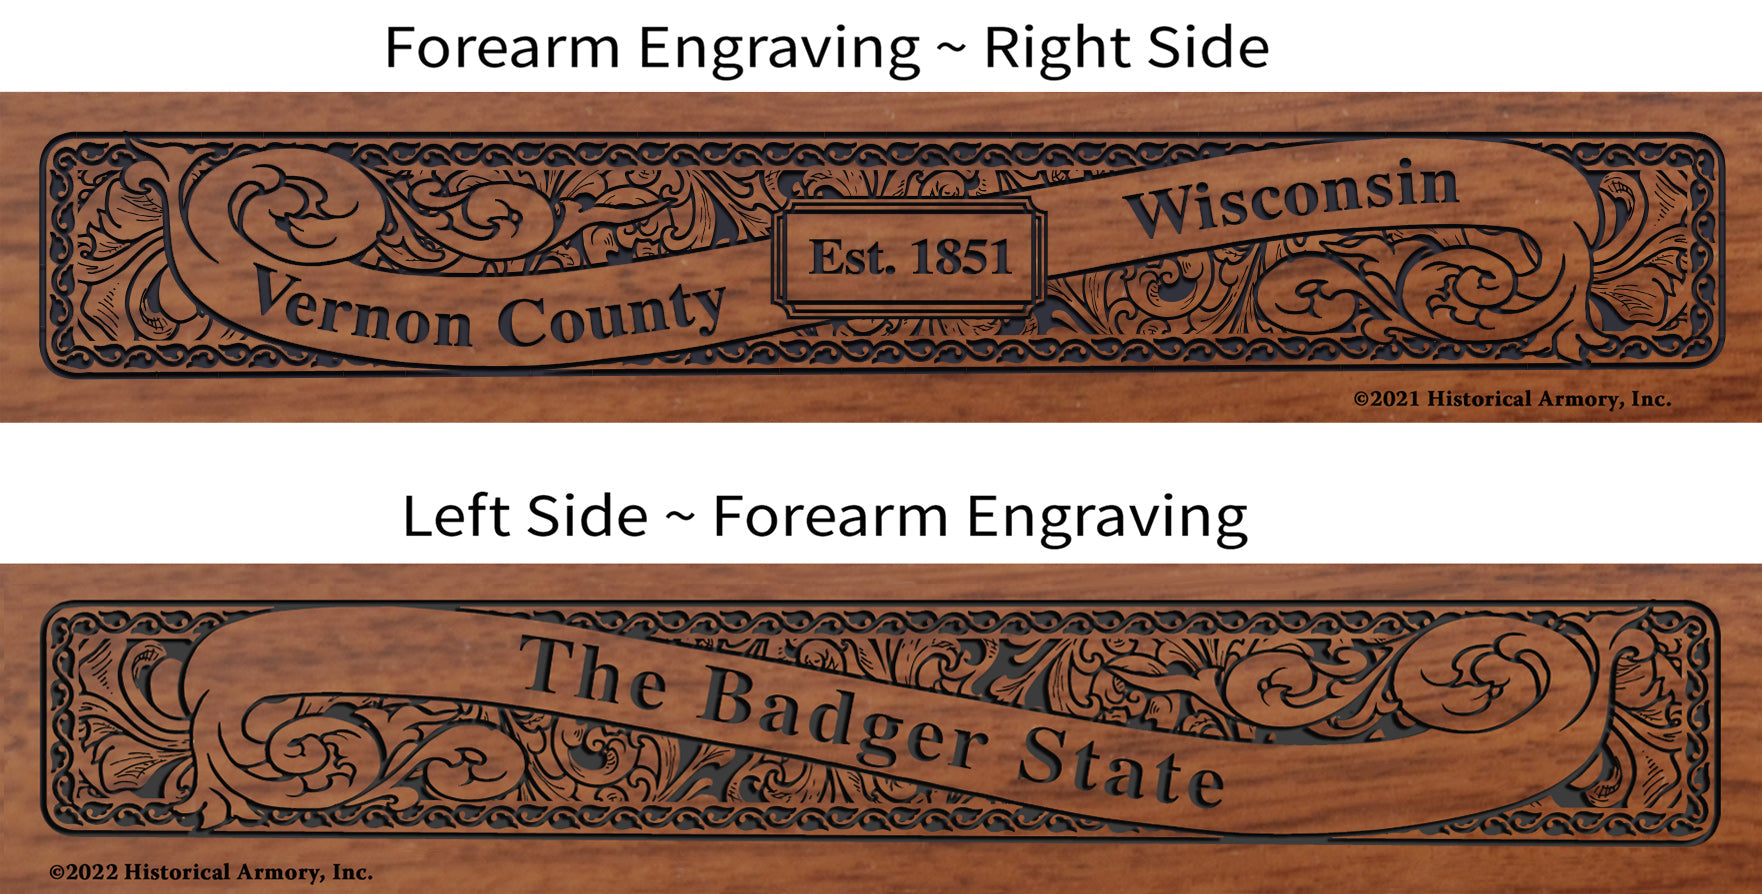 Vernon County Wisconsin Engraved Rifle Forearm